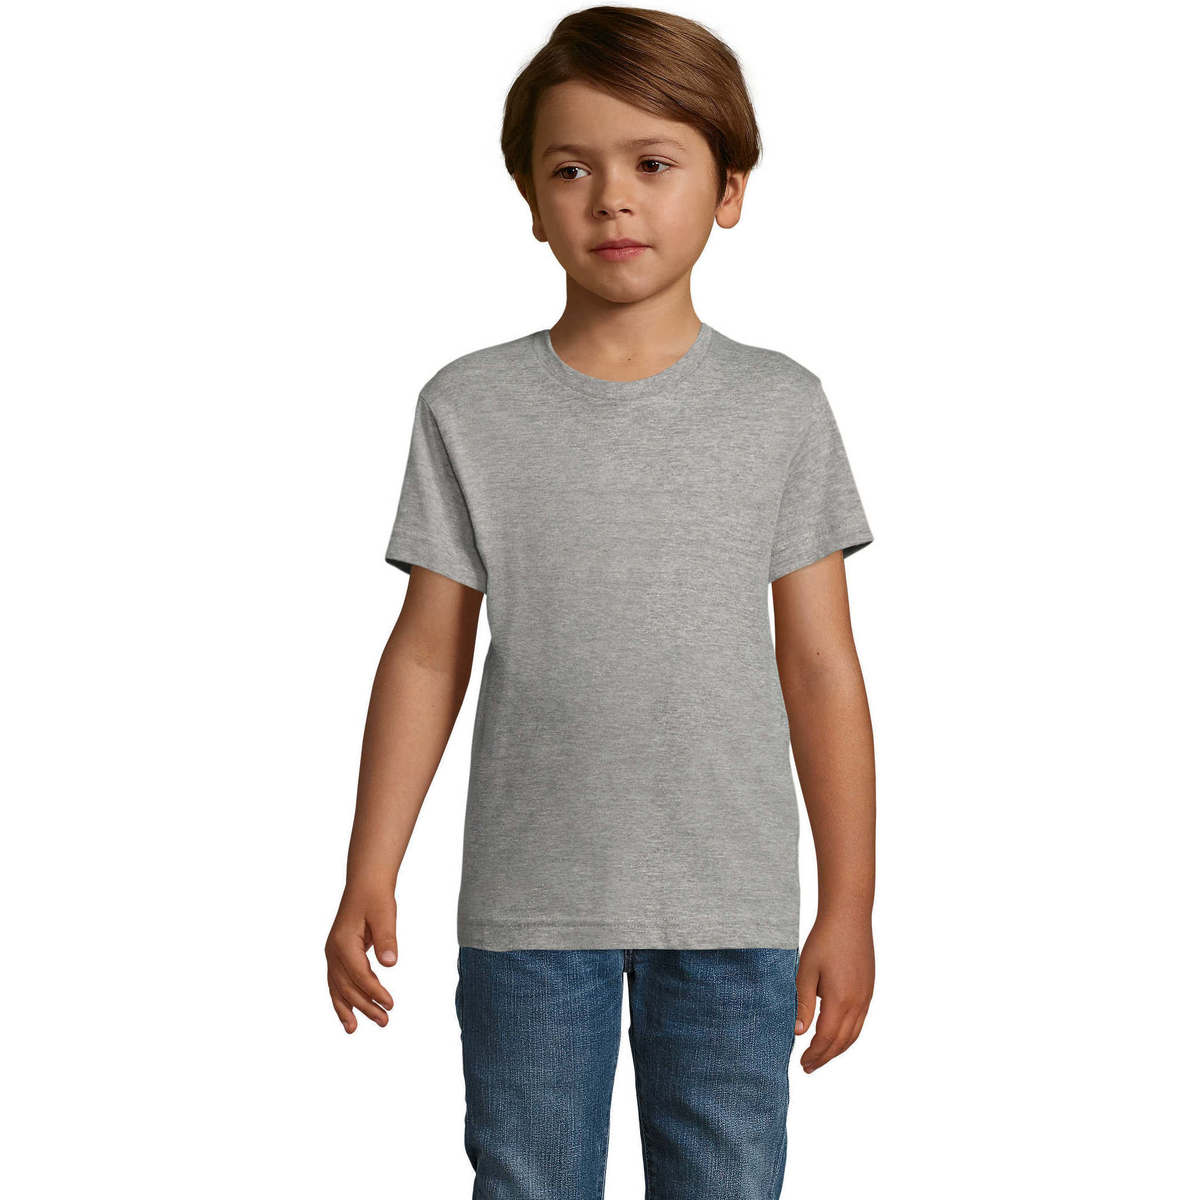 Textiel Kinderen T-shirts korte mouwen Sols REGENT FIT CAMISETA MANGA CORTA Grijs